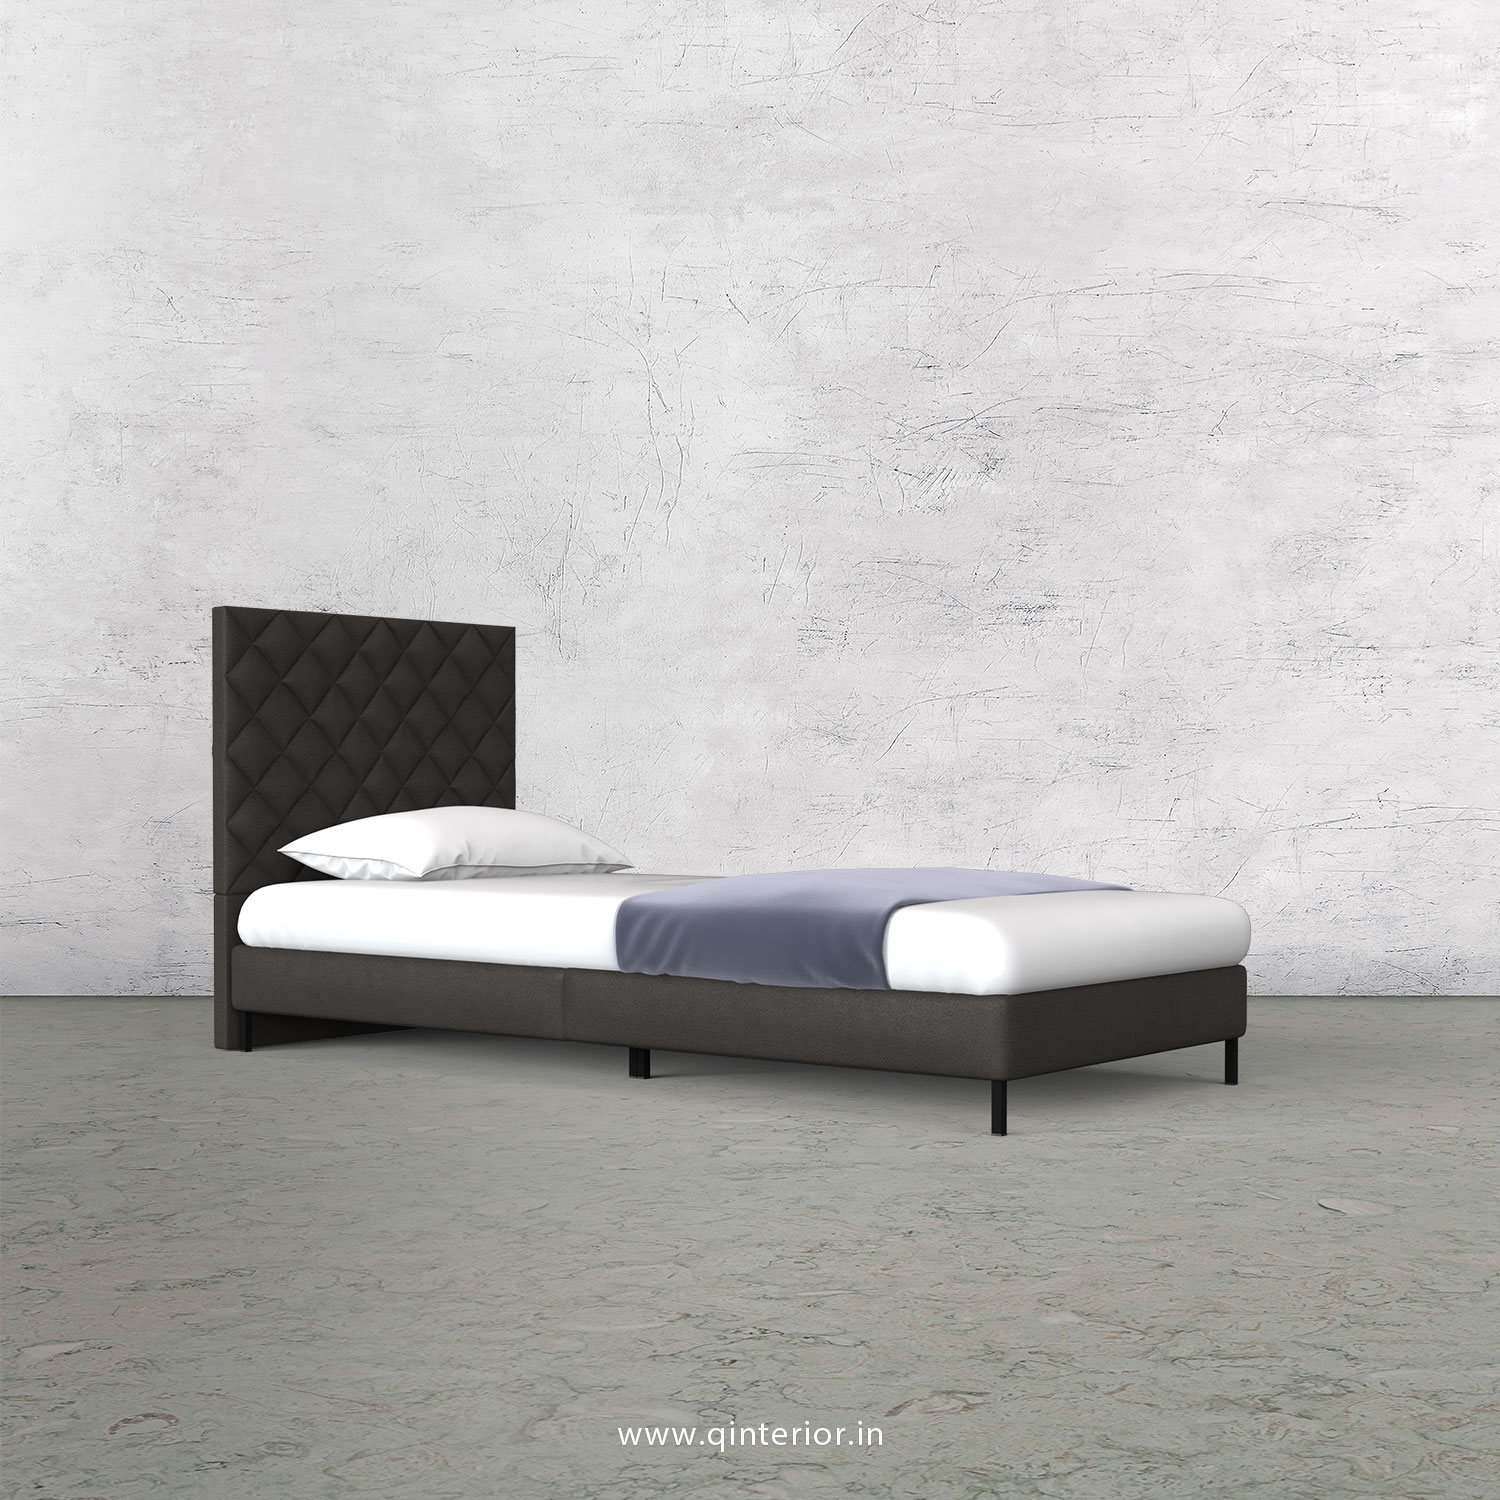 Aquila Single Bed in Fab Leather – SBD003 FL15